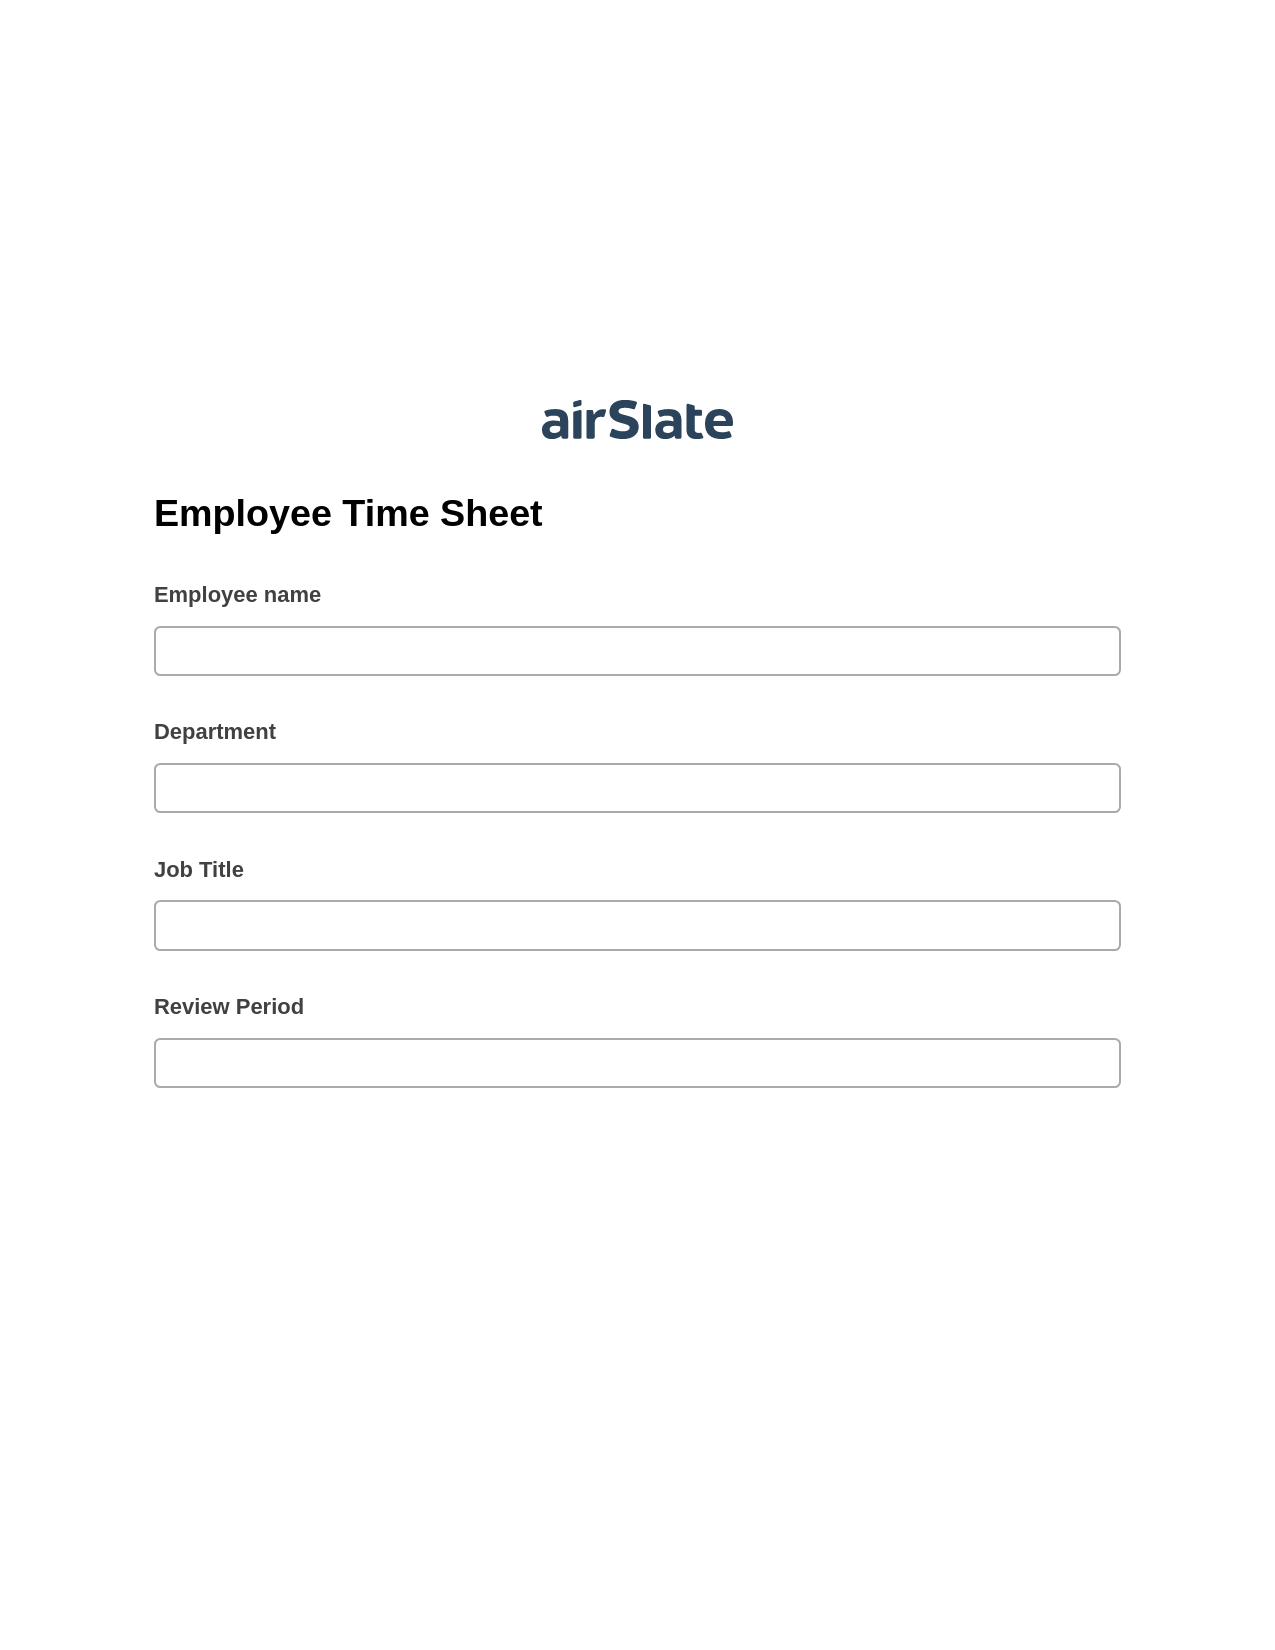 Multirole Employee Time Sheet Pre-fill Document Bot, Email Notification Bot, Export to Smartsheet